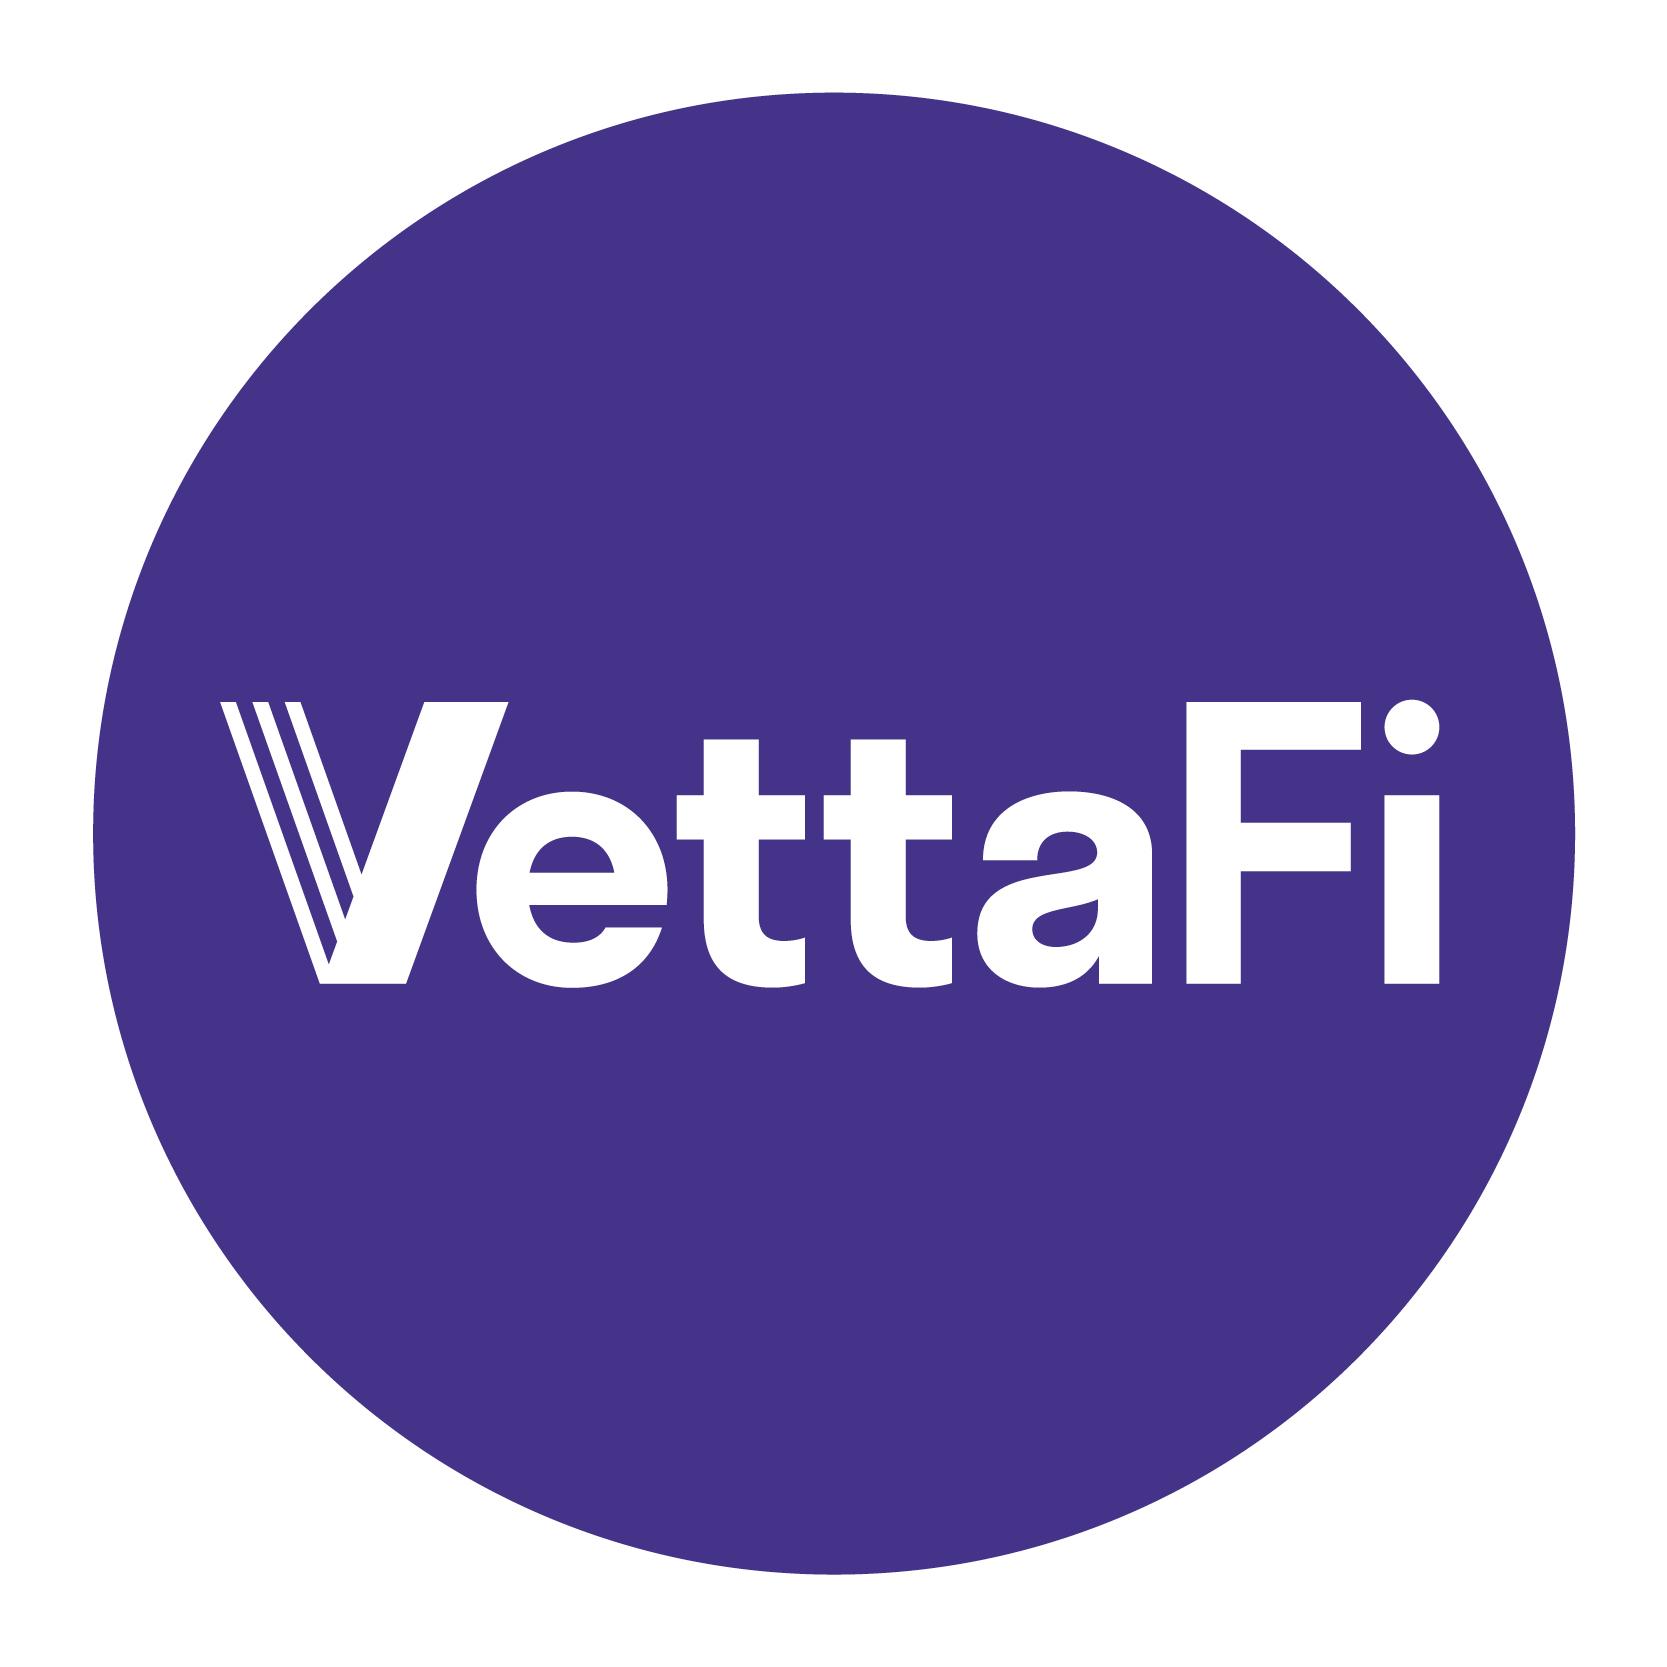 Avatar - VettaFi | Advisor Perspectives